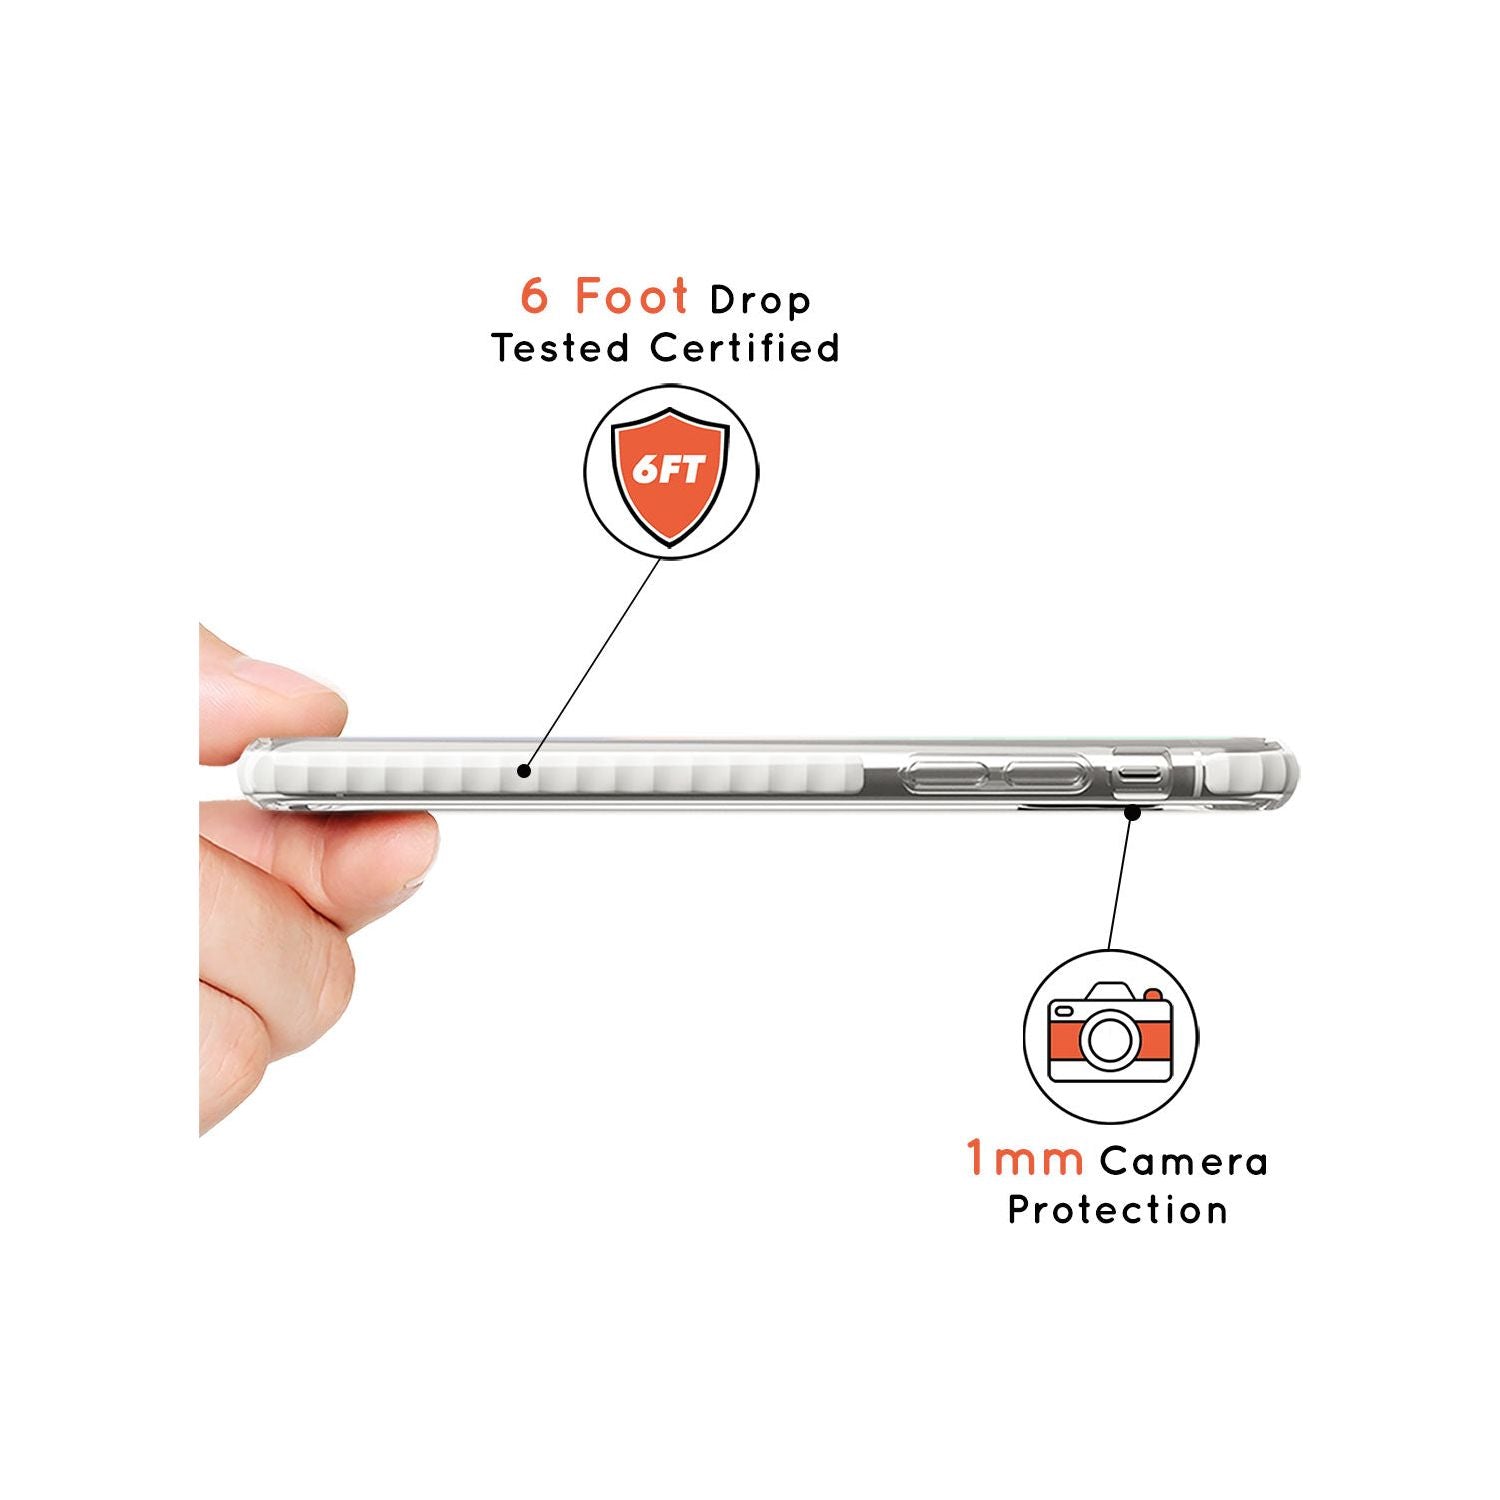 Wildflower Chain Design - Cream Impact Phone Case for iPhone 11 Pro Max